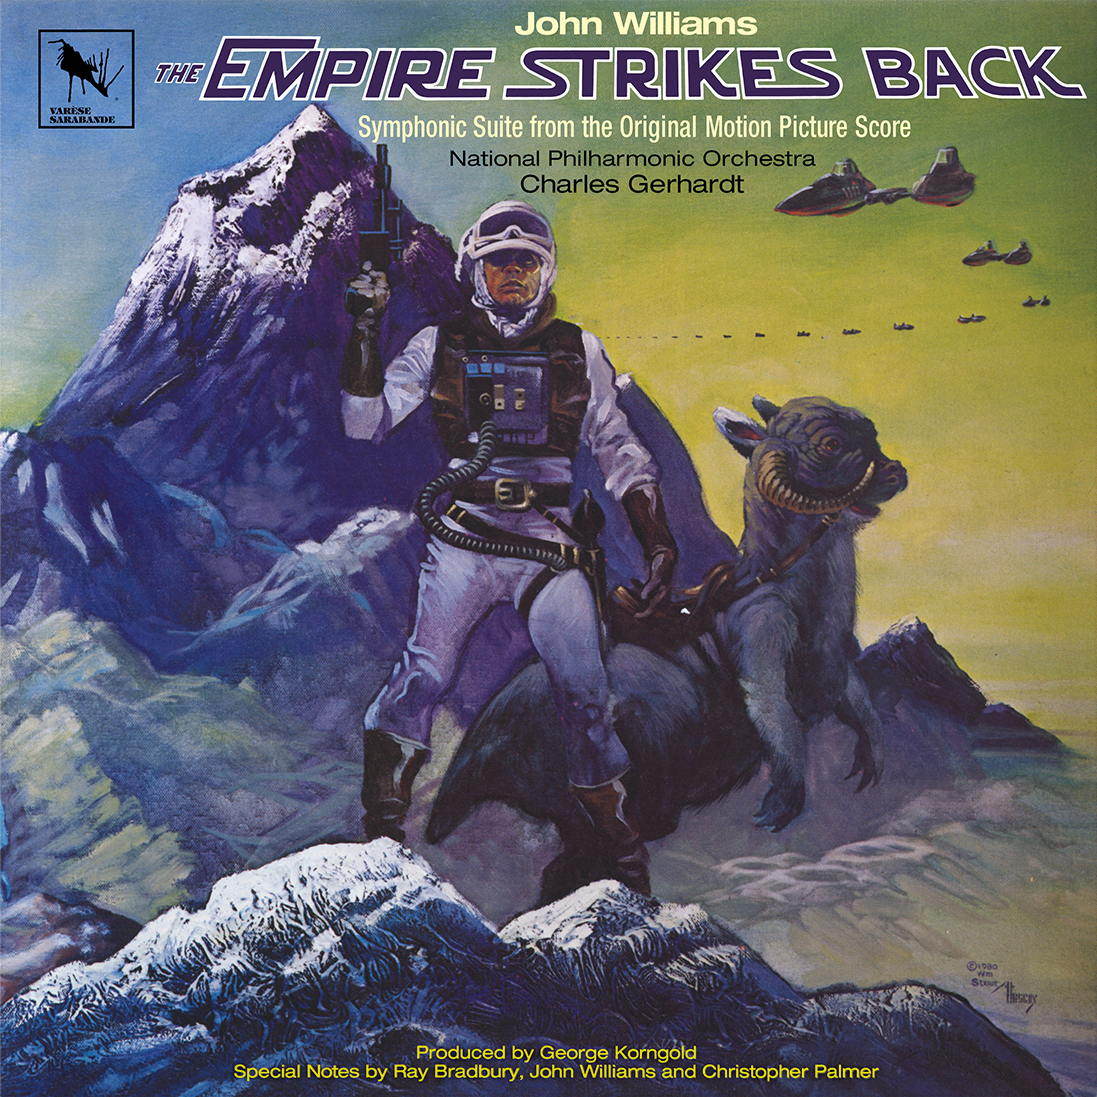 Саундтрек UME (USM) John Williams, Charles Gerhardt, National Philharmonic Orchestra - The Empire Strikes Back (Symphonic Suite) shadow empire pc